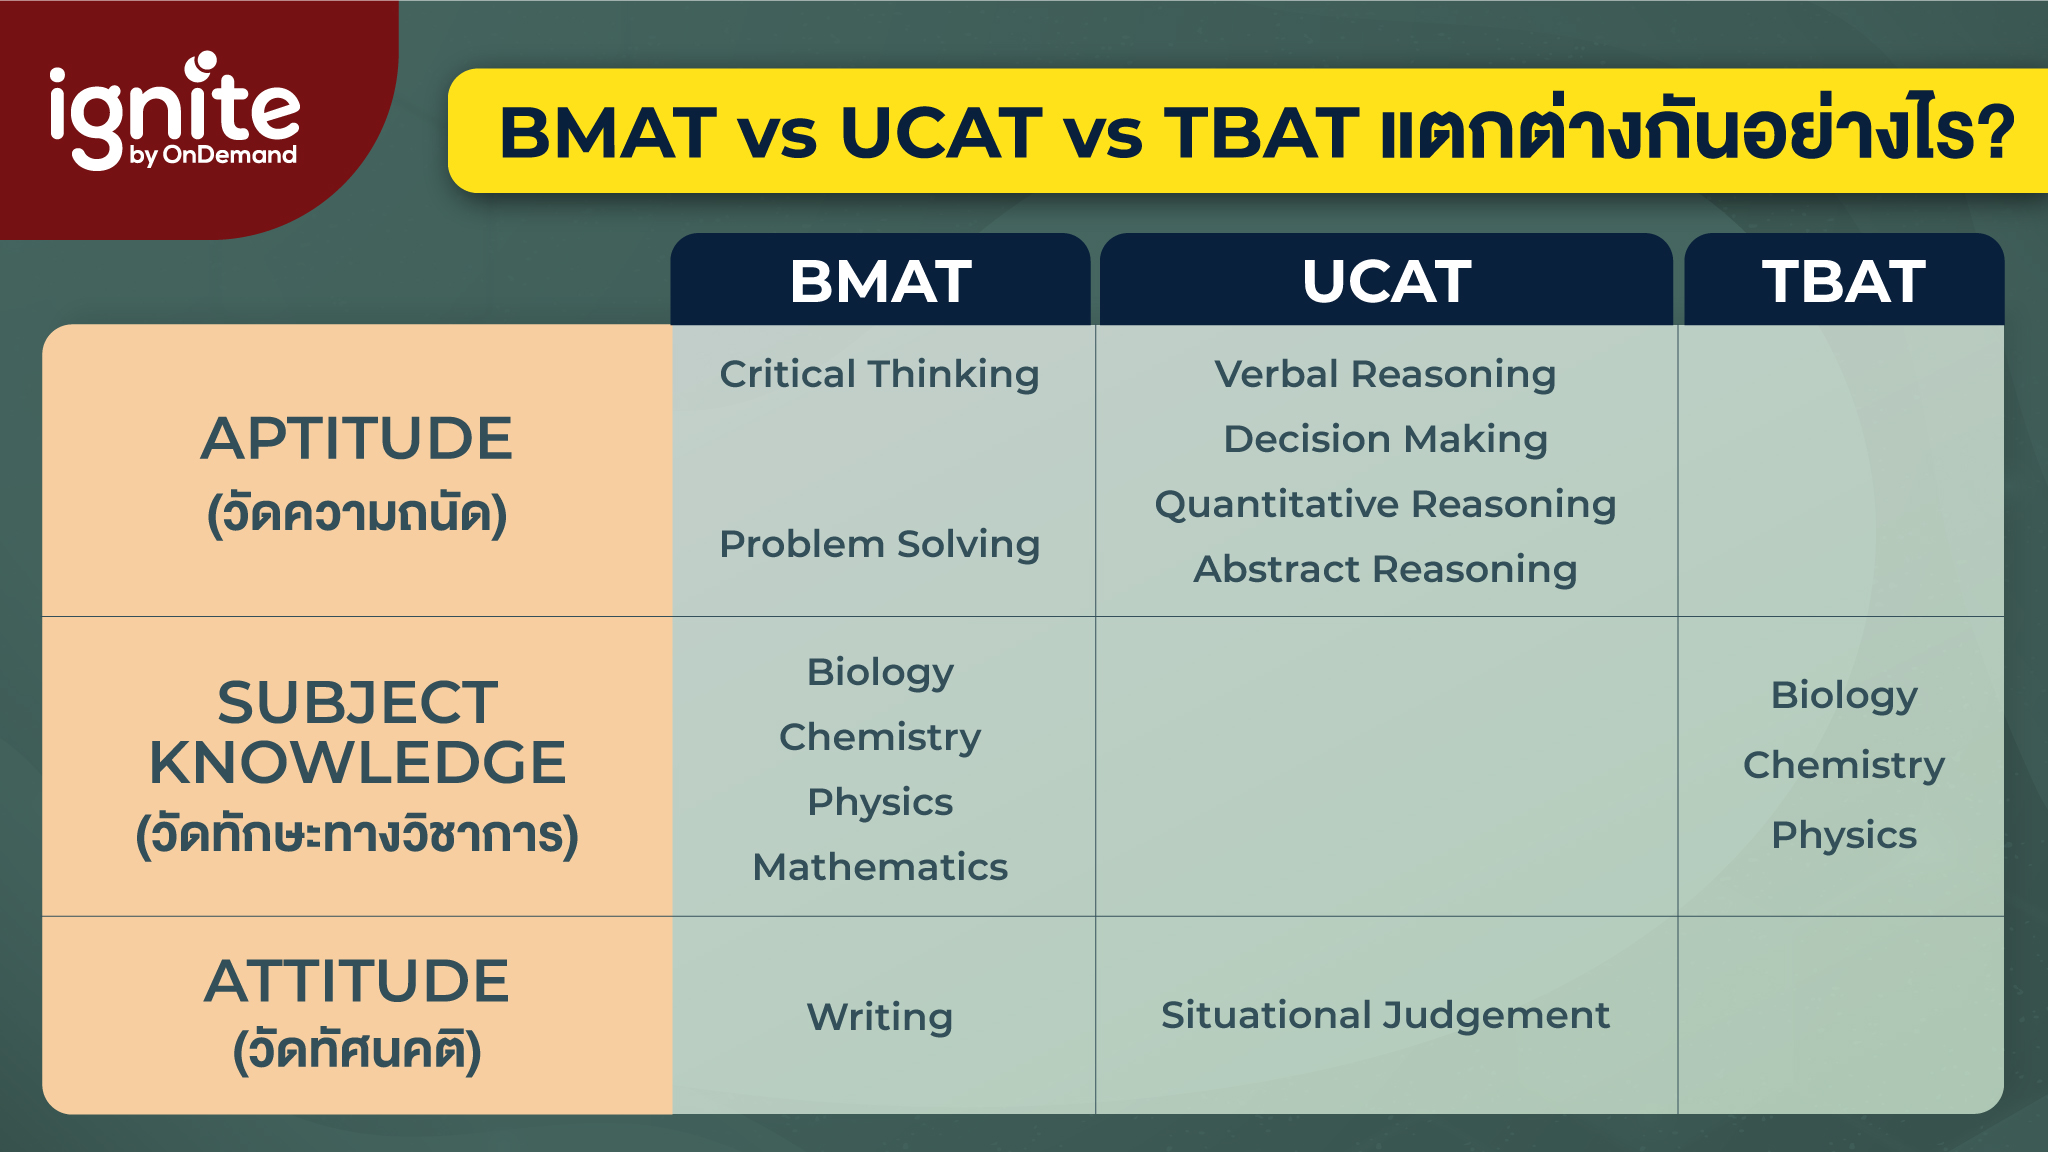 TBAT ต่างจาก BMAT และ UCAT อย่างไร - ignite by ondemand - banner